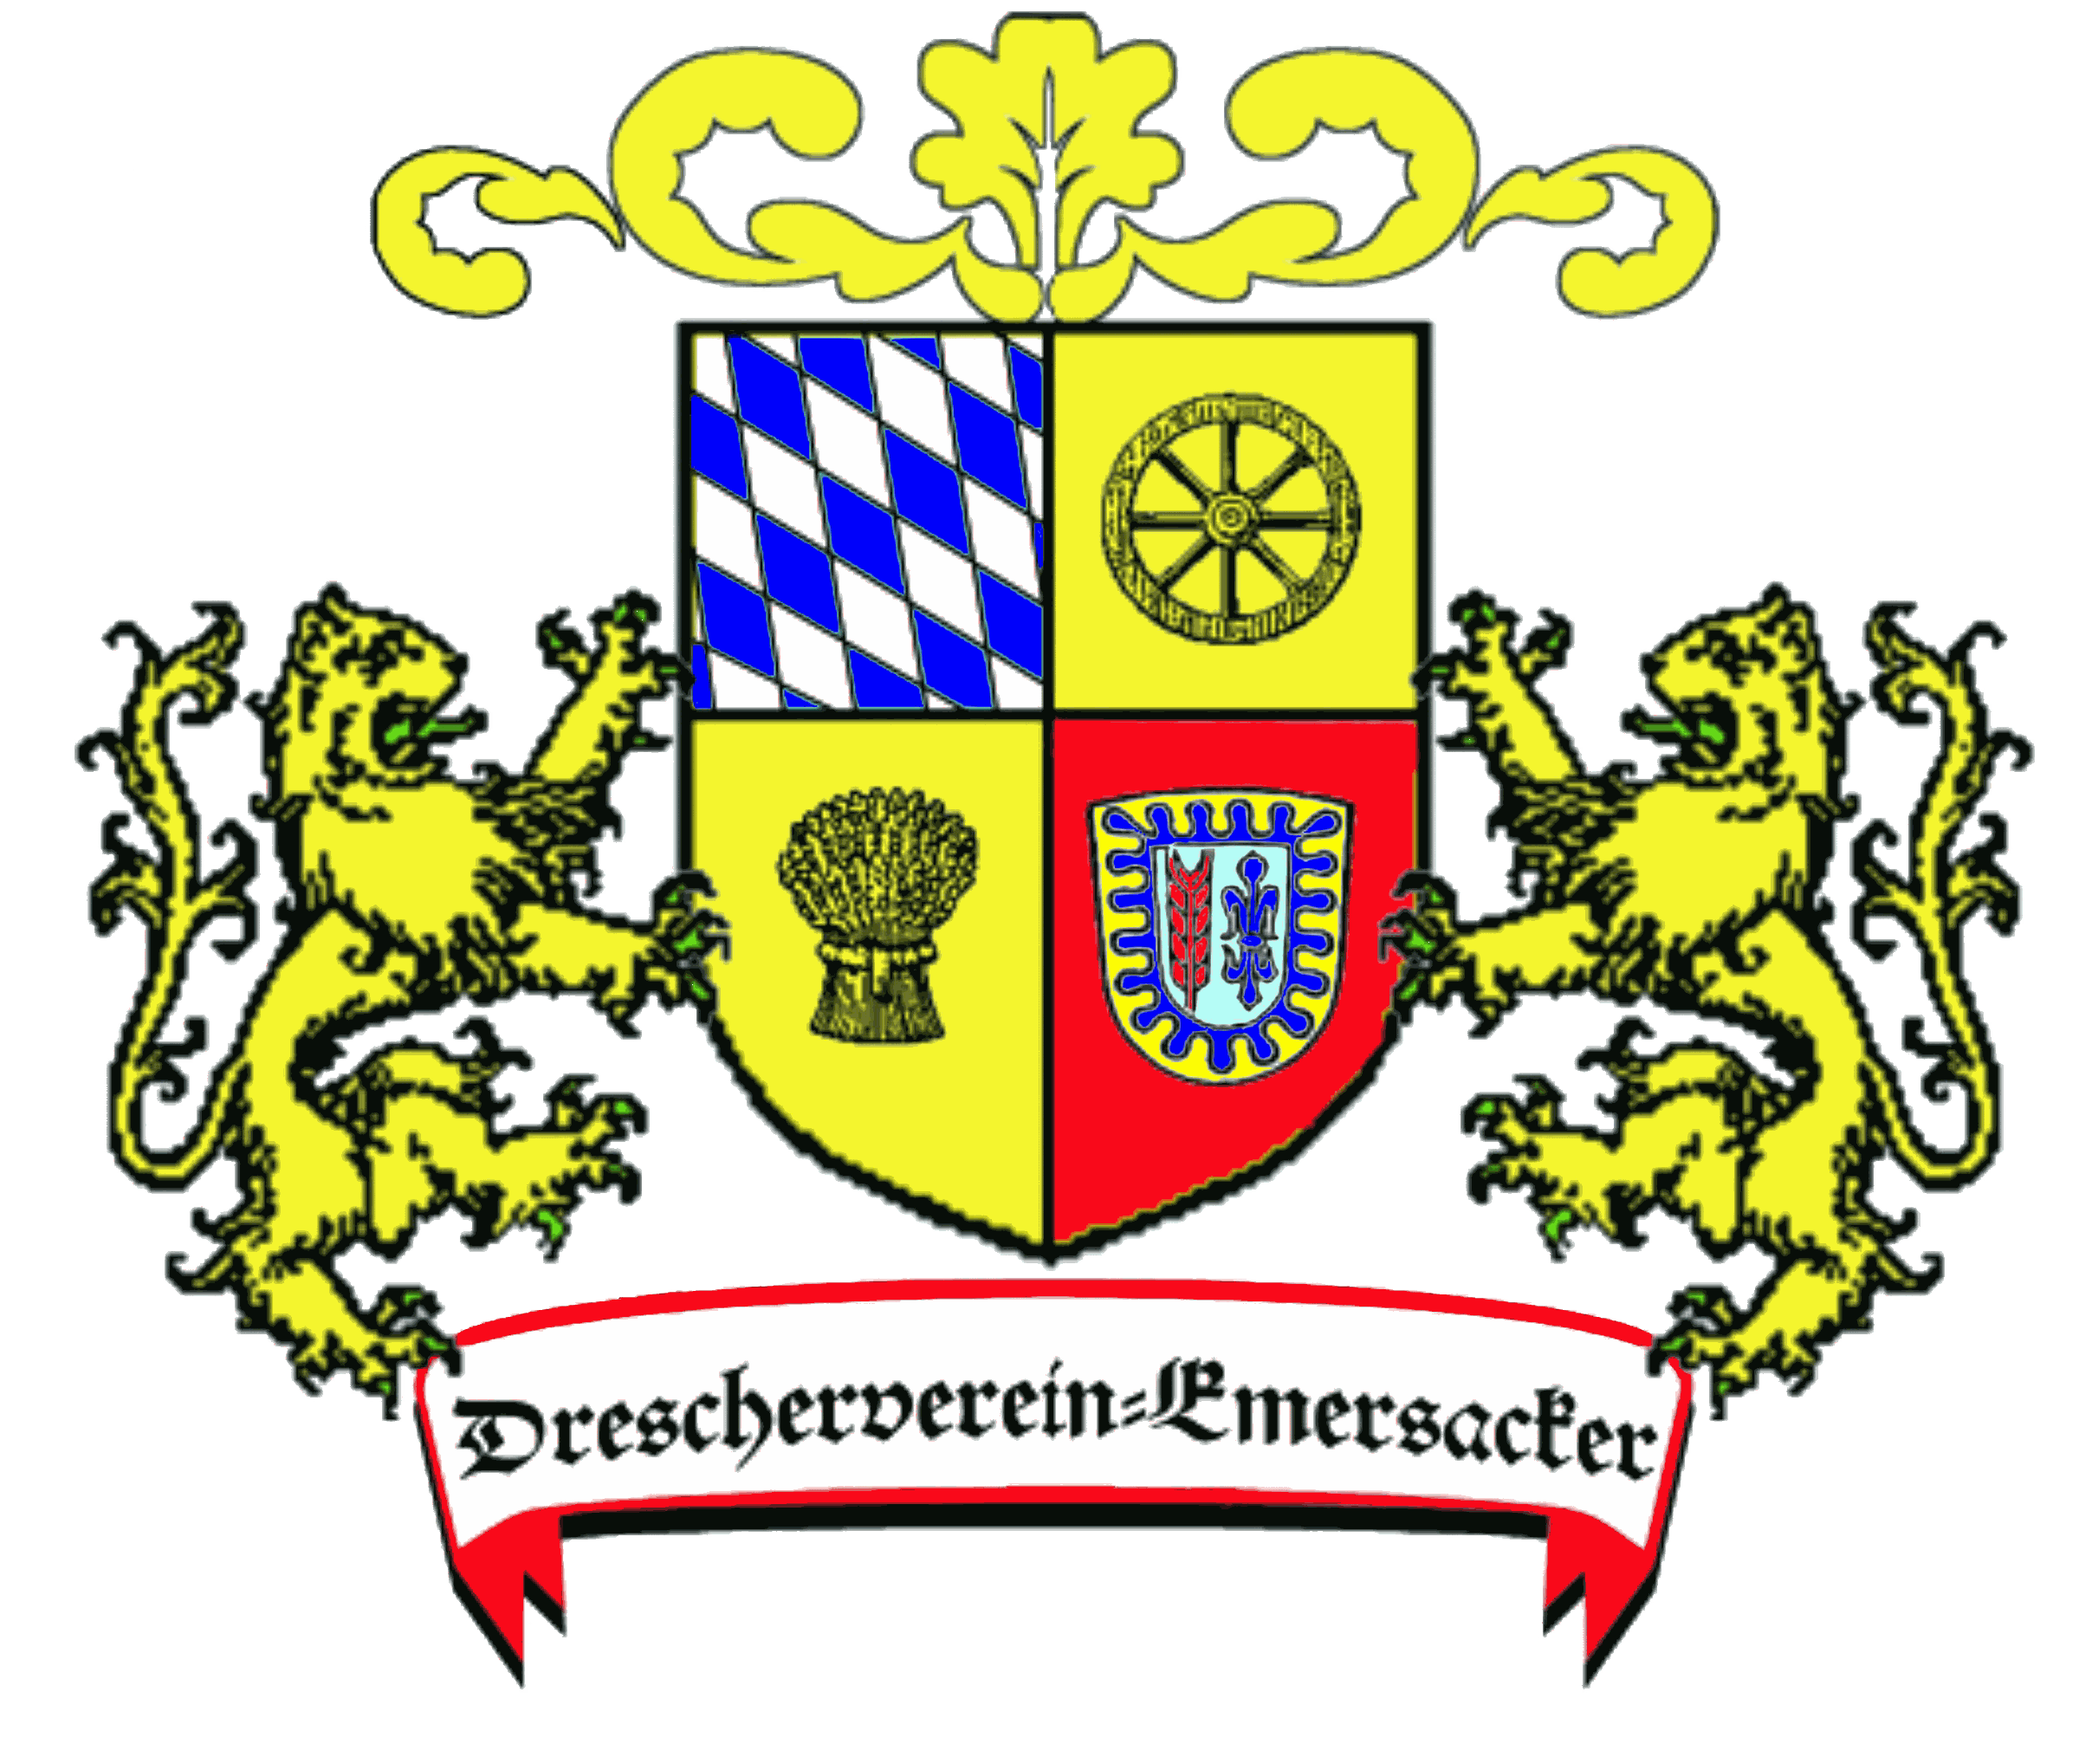 (c) Drescherverein.de